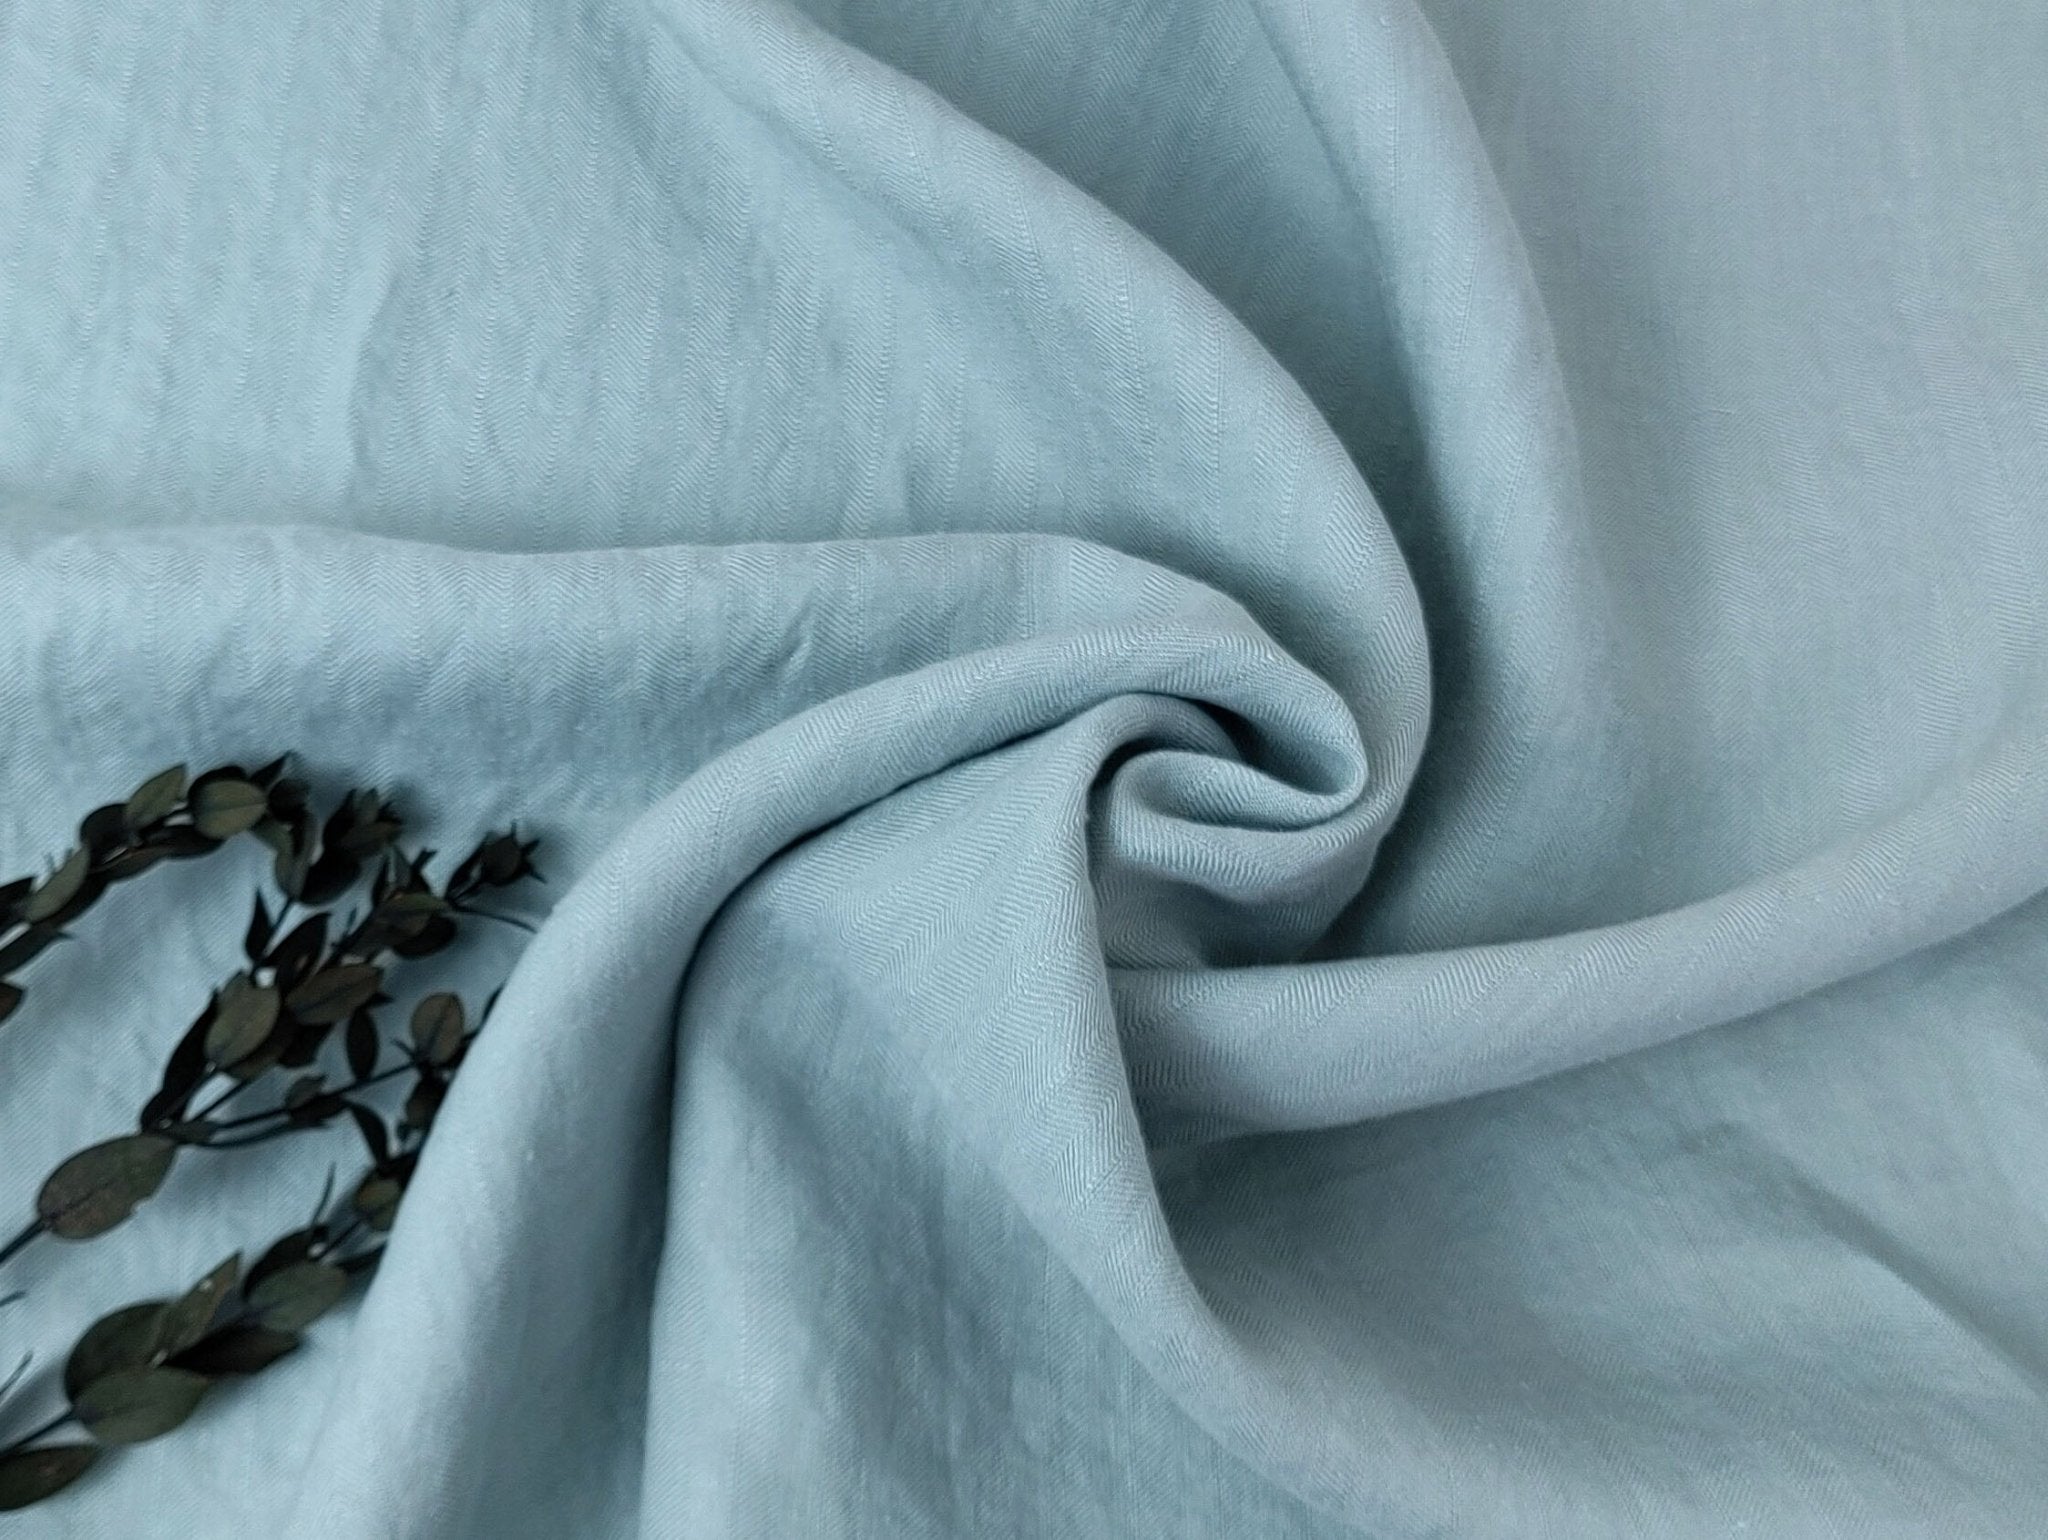 Mint Elegance: 100% Linen HBT Herringbone Twill Fabric with High Density Weave 7833 - The Linen Lab - Mint